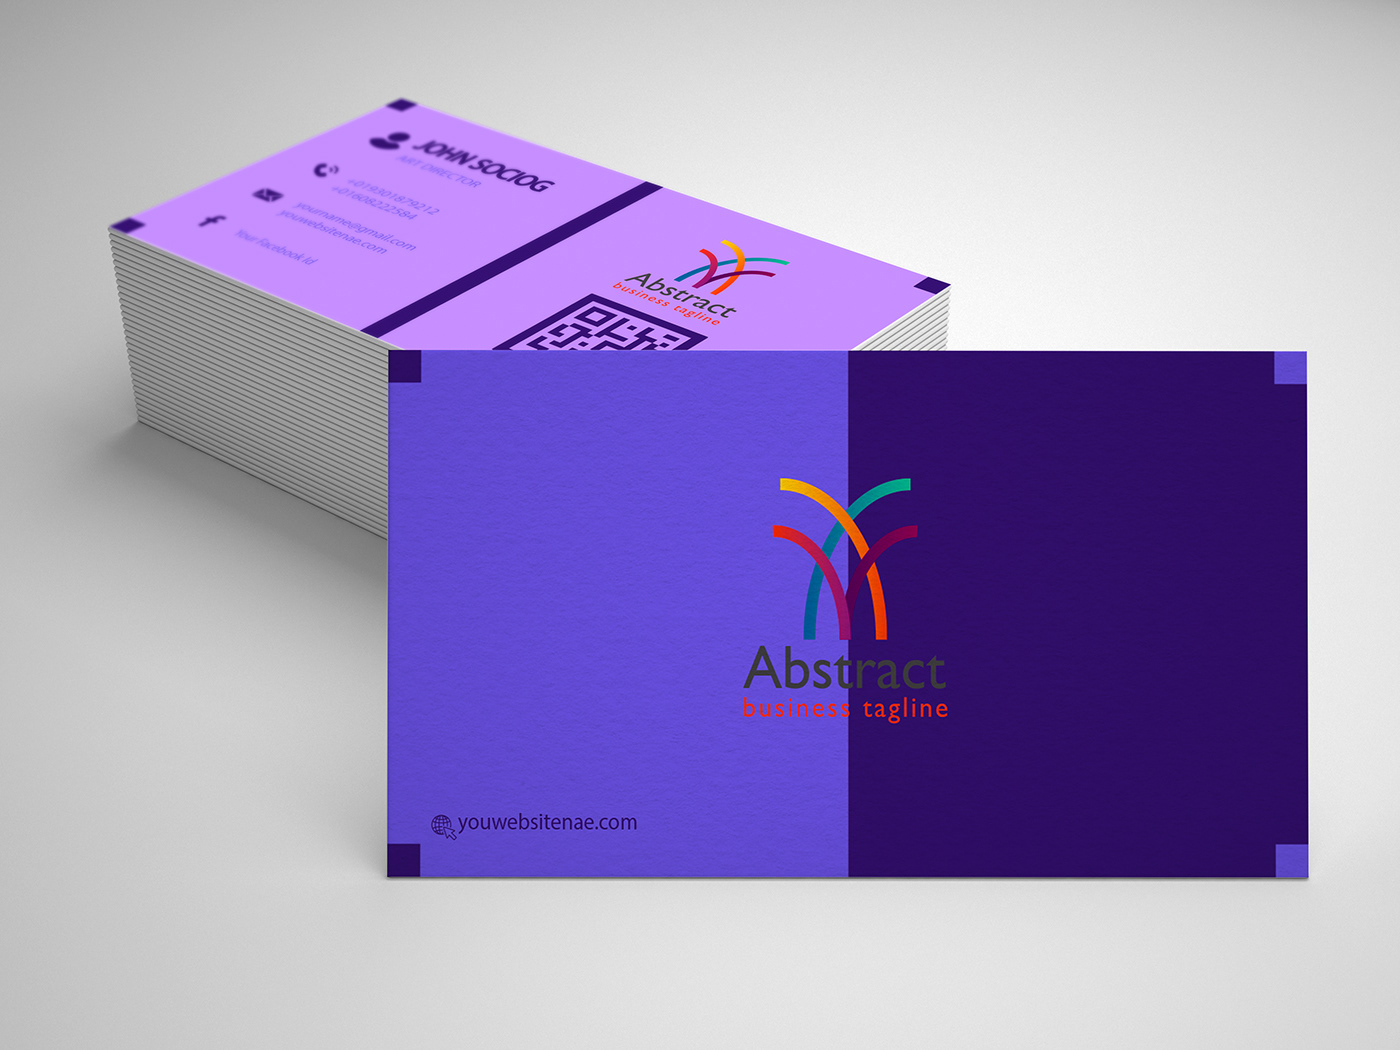 Purple Business Card